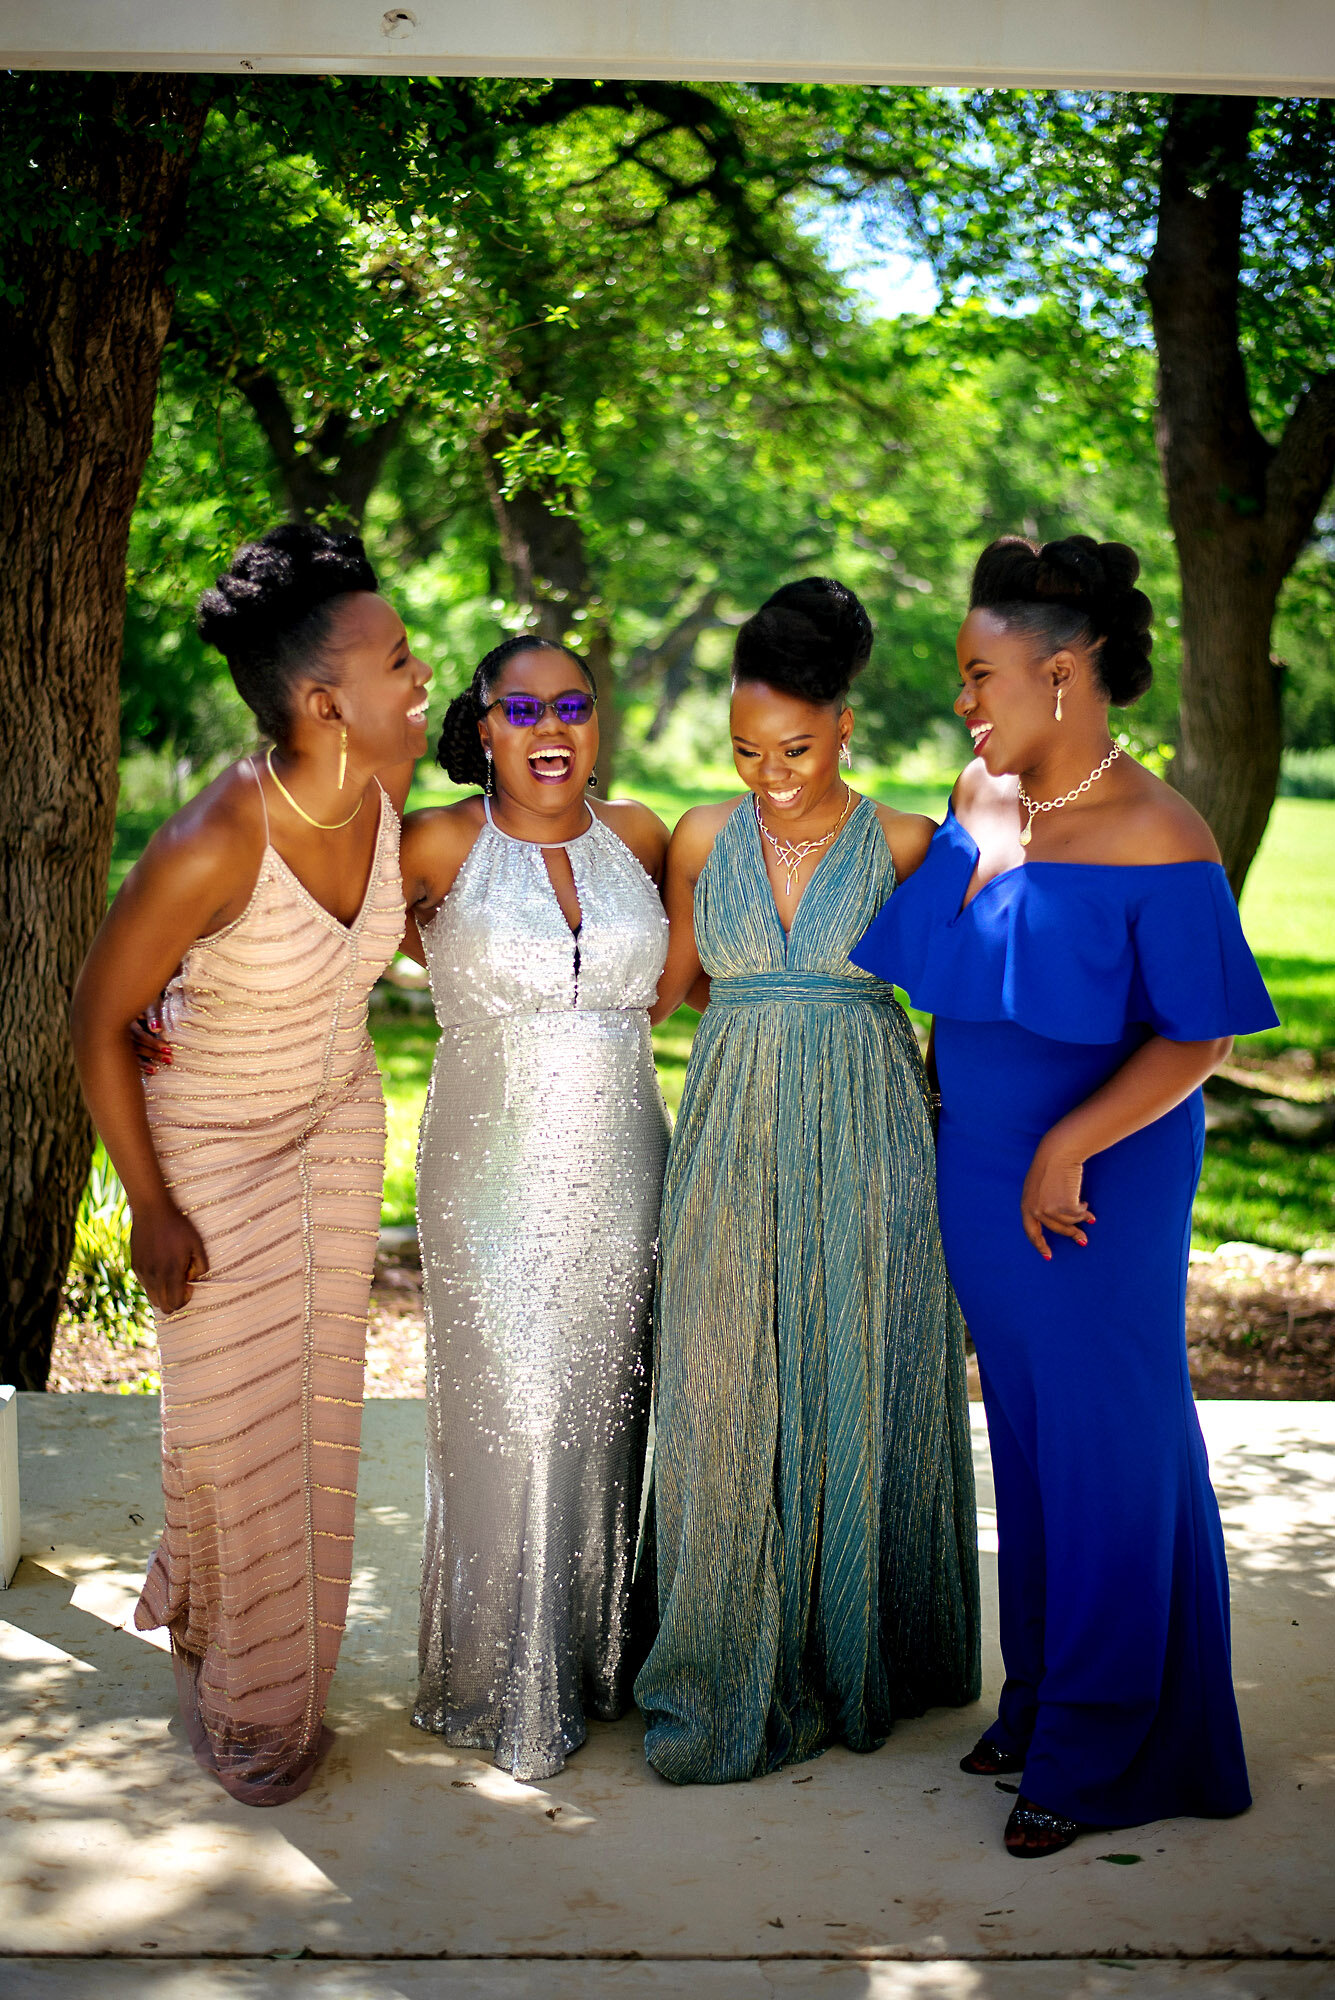 07-Austin-wedding-photographer-Jide-Alakija-all four brides sisters.jpg.JPG